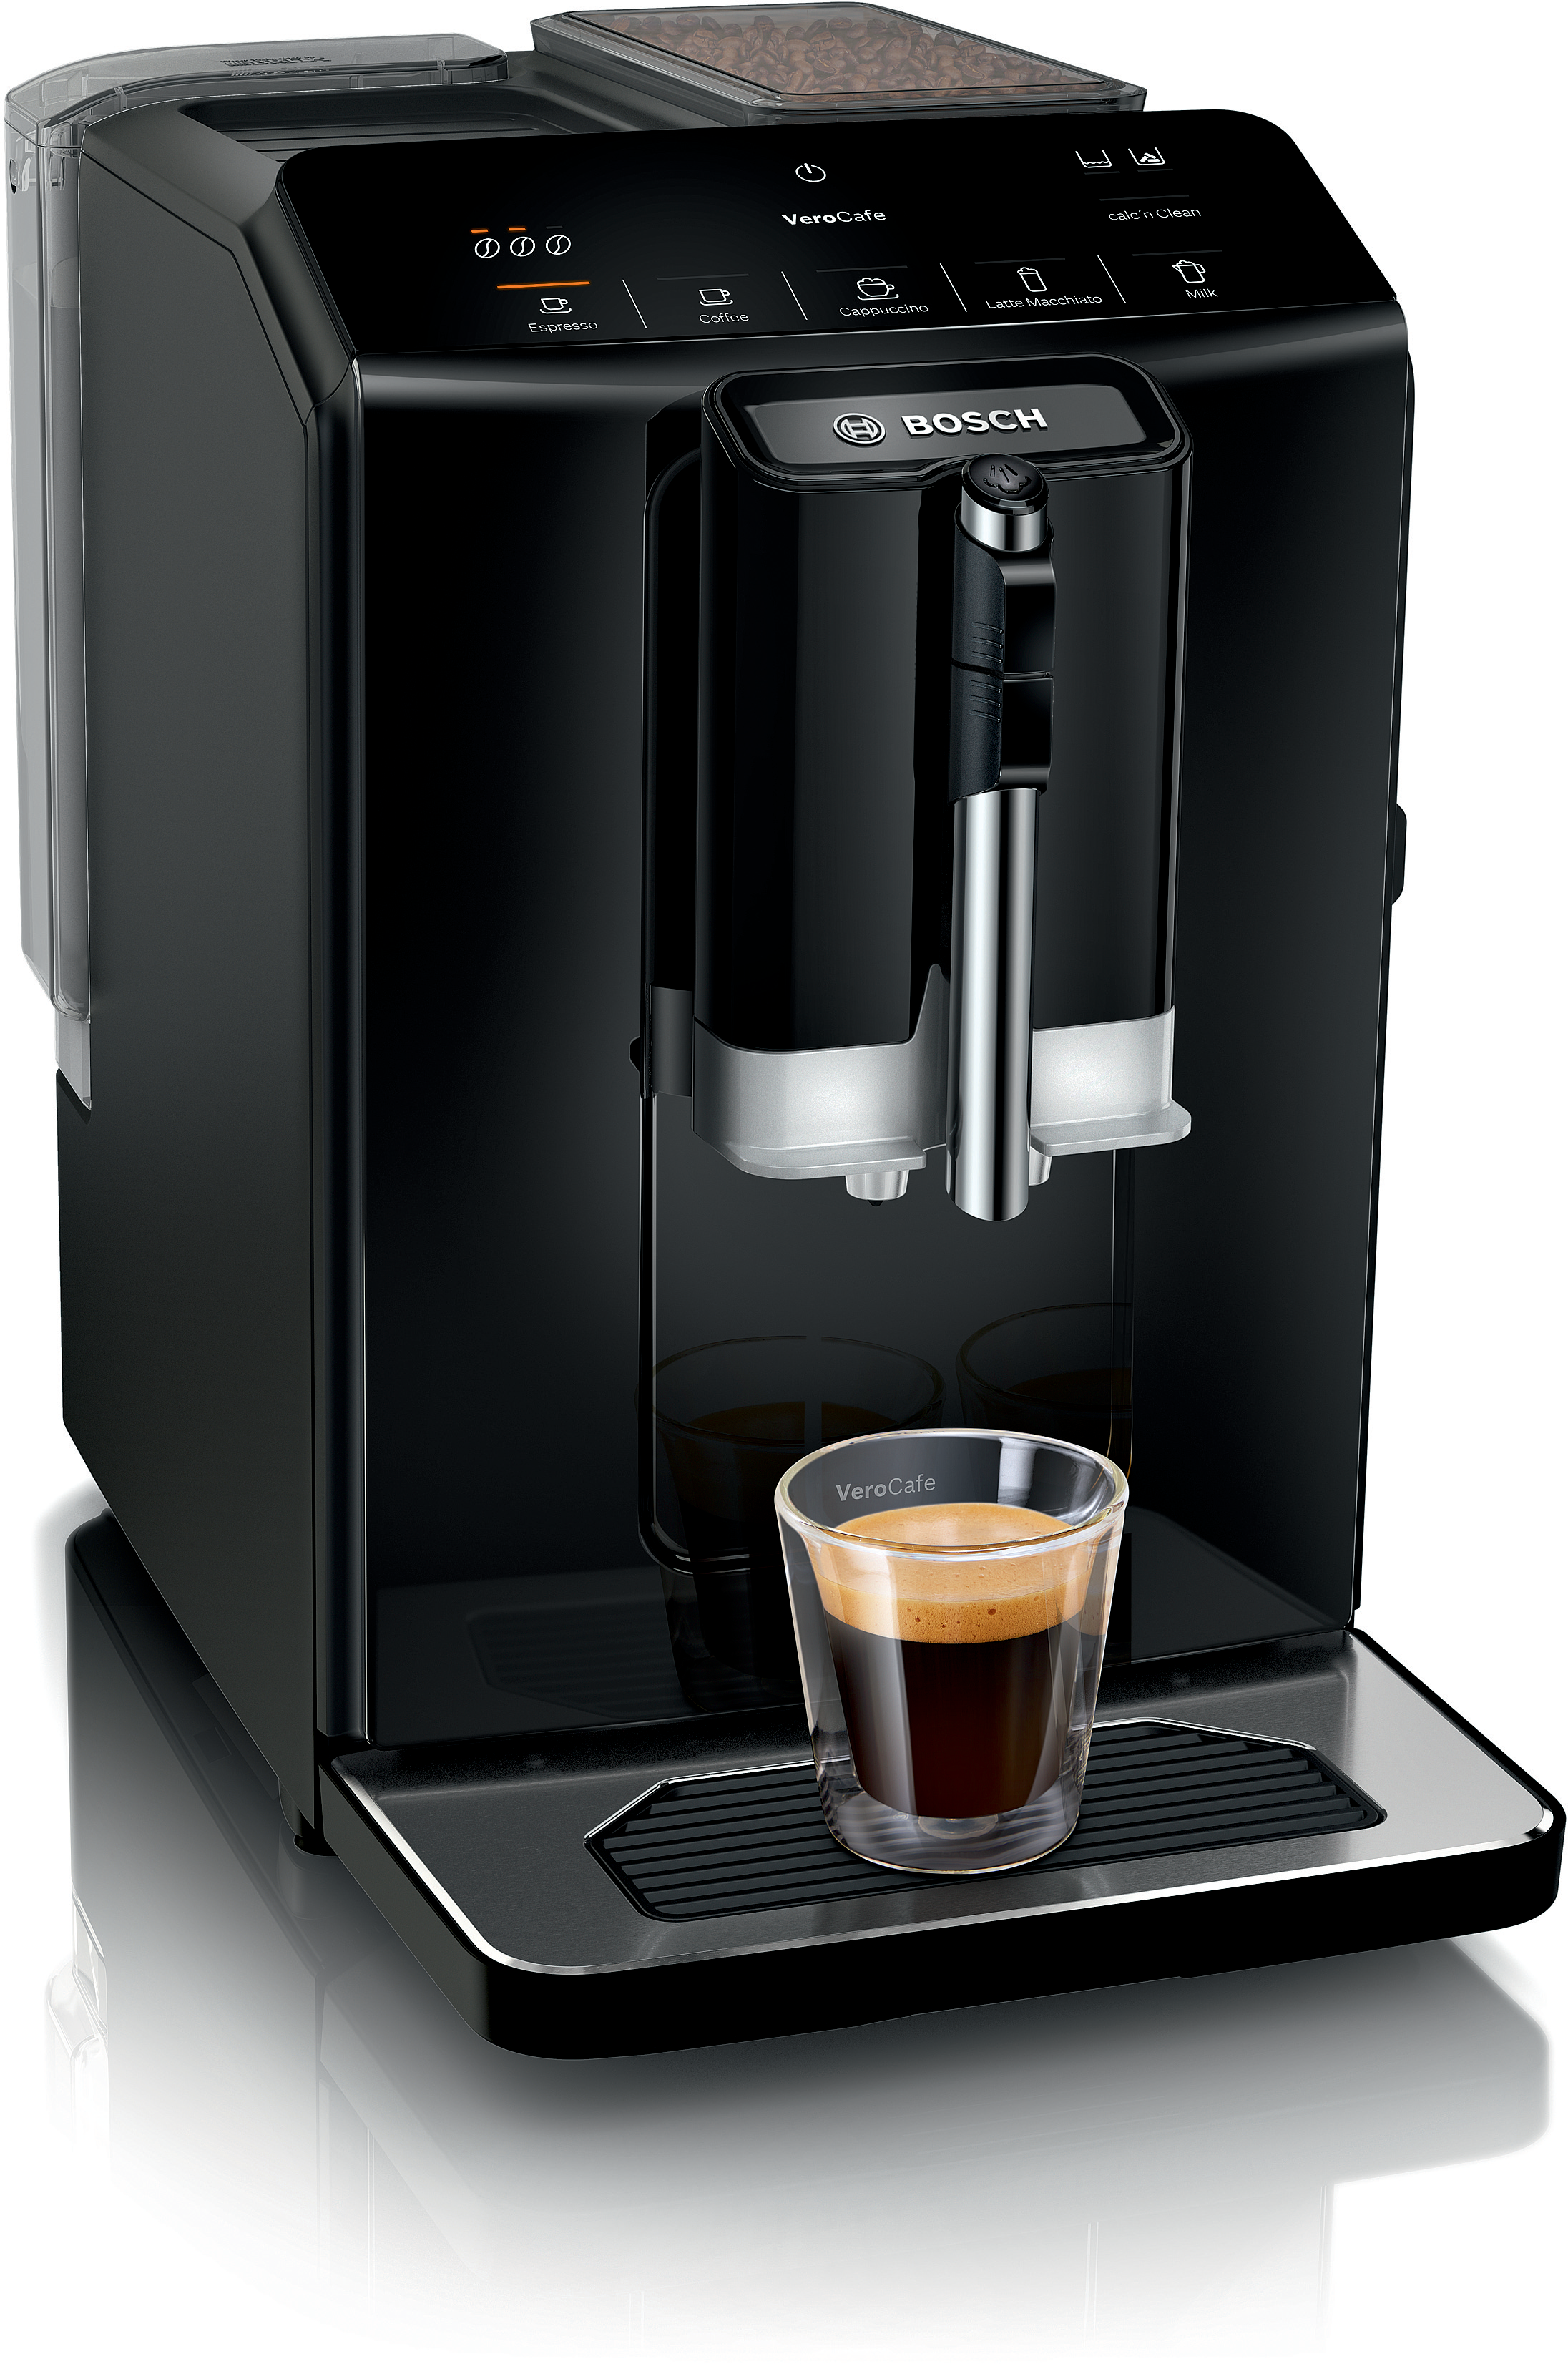 Fully automatic coffee machine, Serie 2 VeroCafe, Piano black, TIE20119